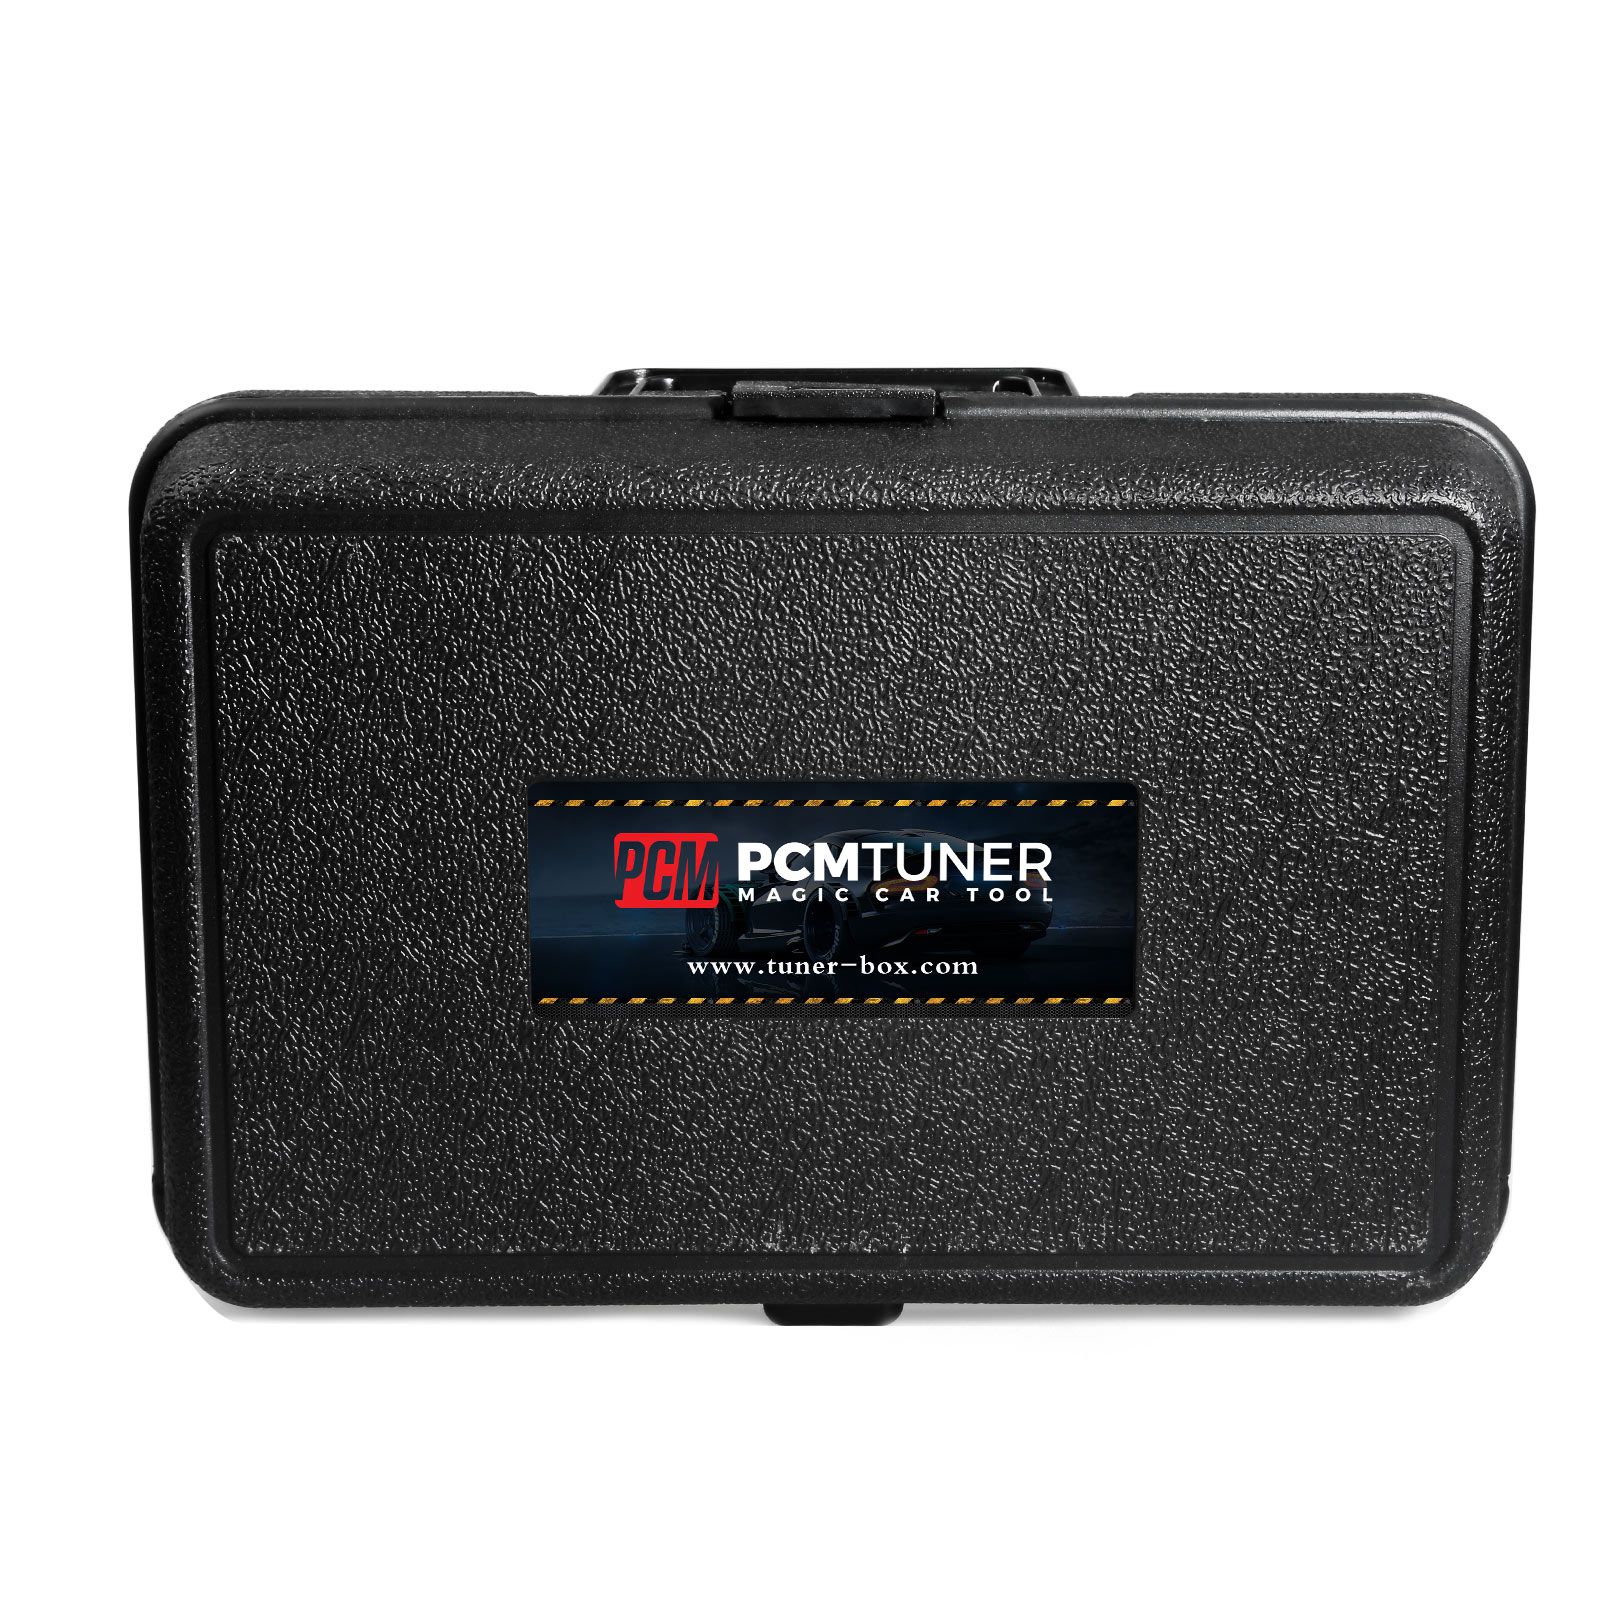 PCMtuner ECU 프로그래머, 67개 모듈, 실리콘 케이스 및 플라스틱 휴대용 케이스